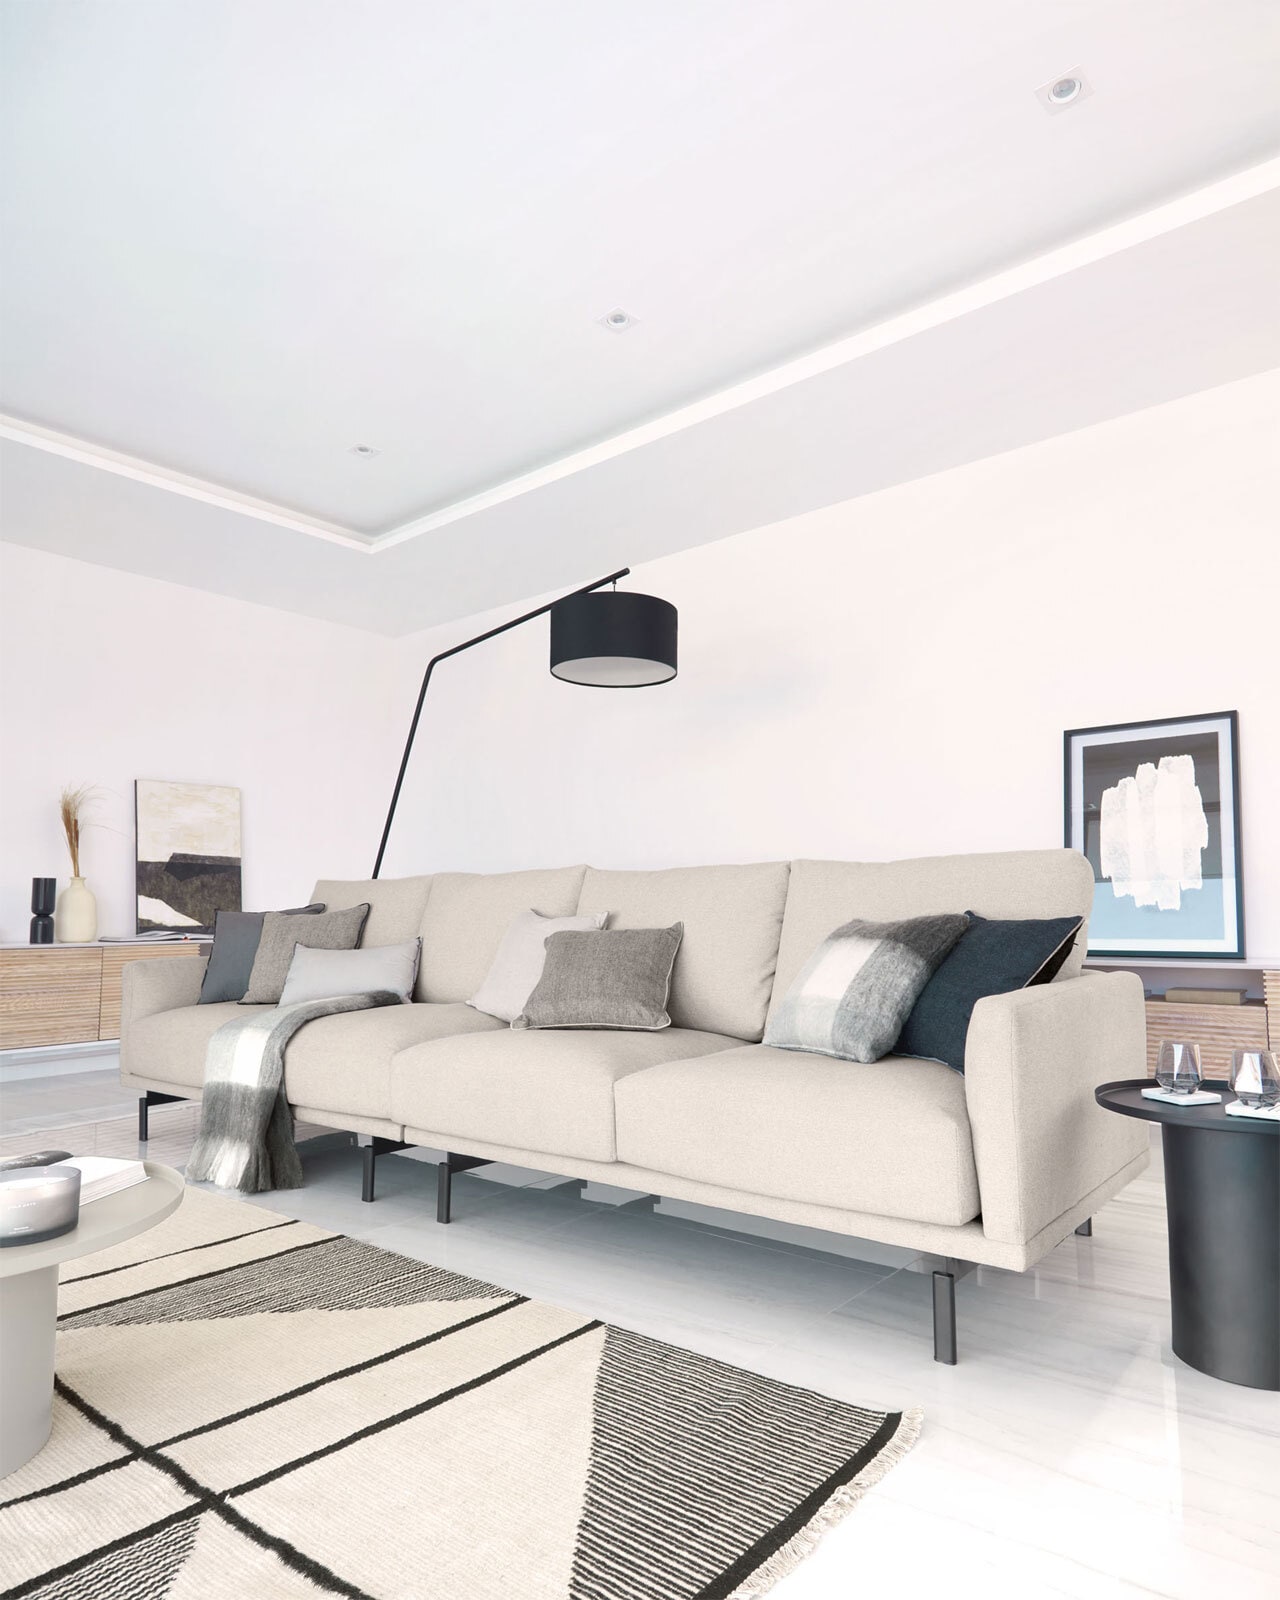 Kave Home Sofa GALENE 4-Sitzer 414 cm beige